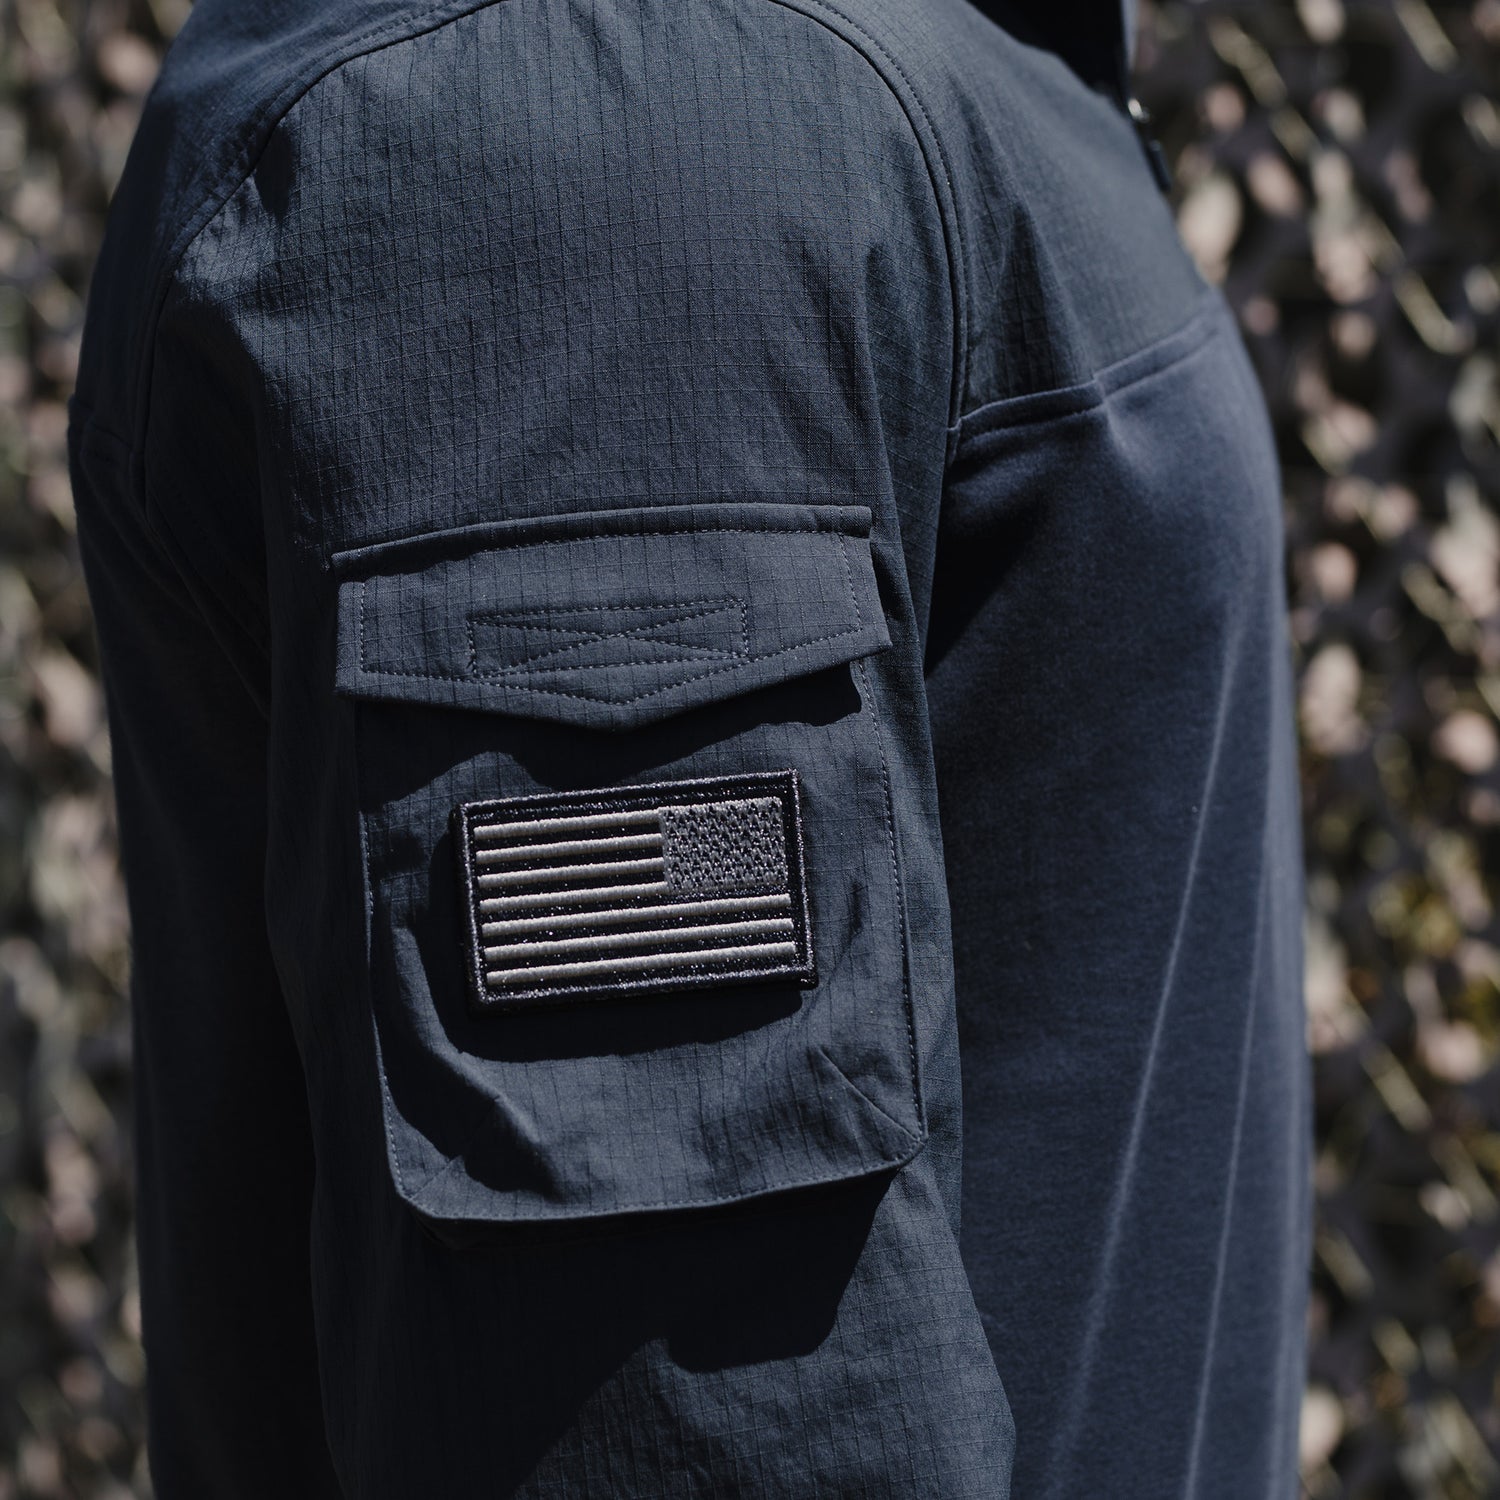 Tactical Clothing: Deep Navy Blue Shirt Design